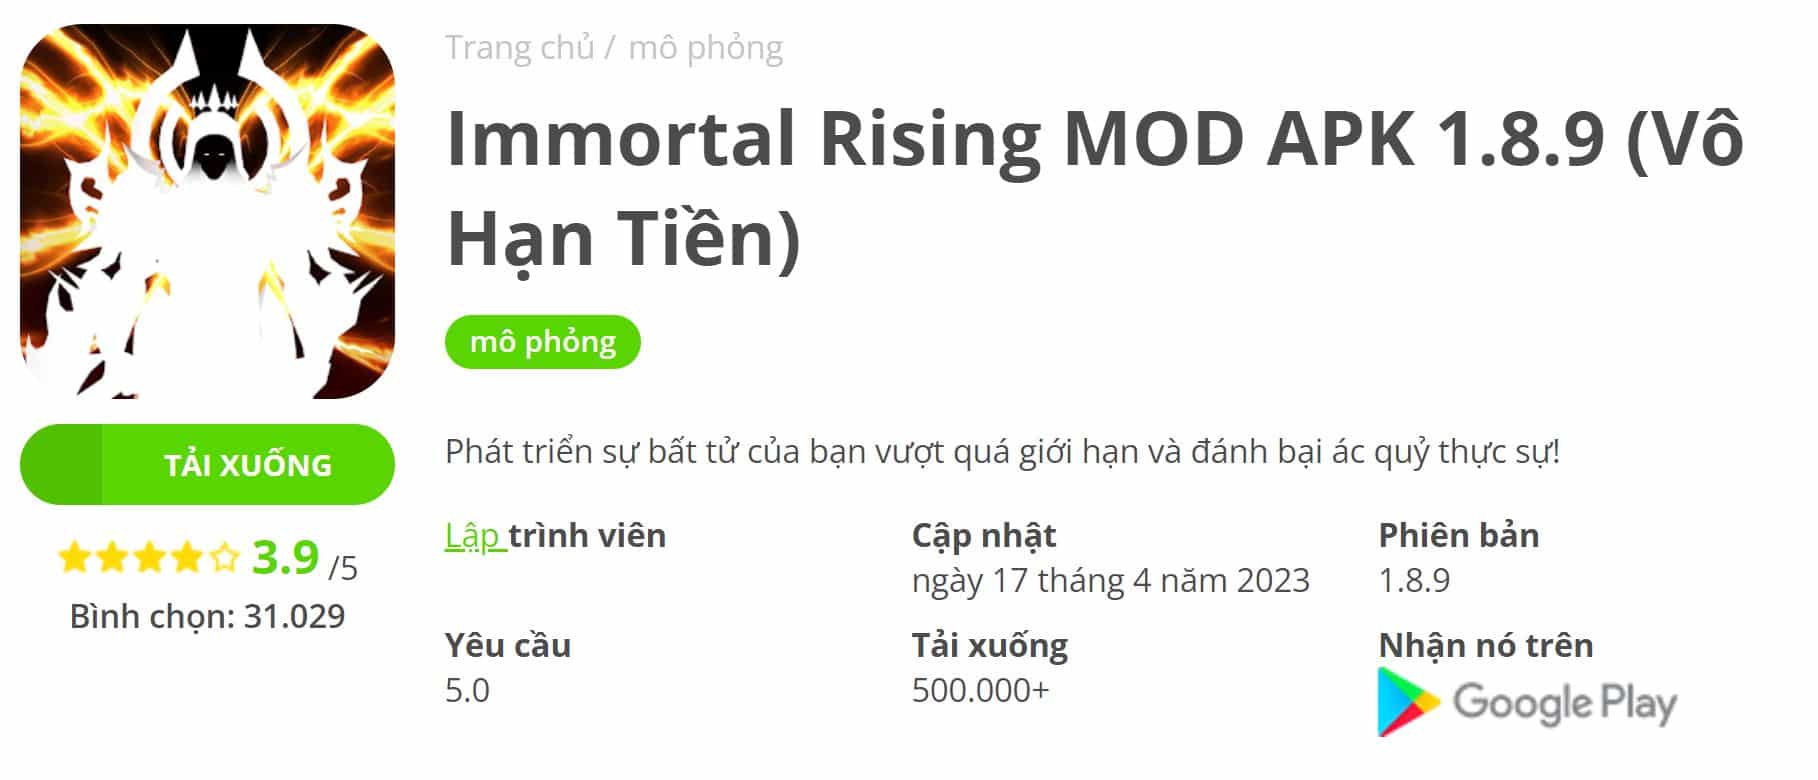 Immortal Rising MOD APK 1.8.9